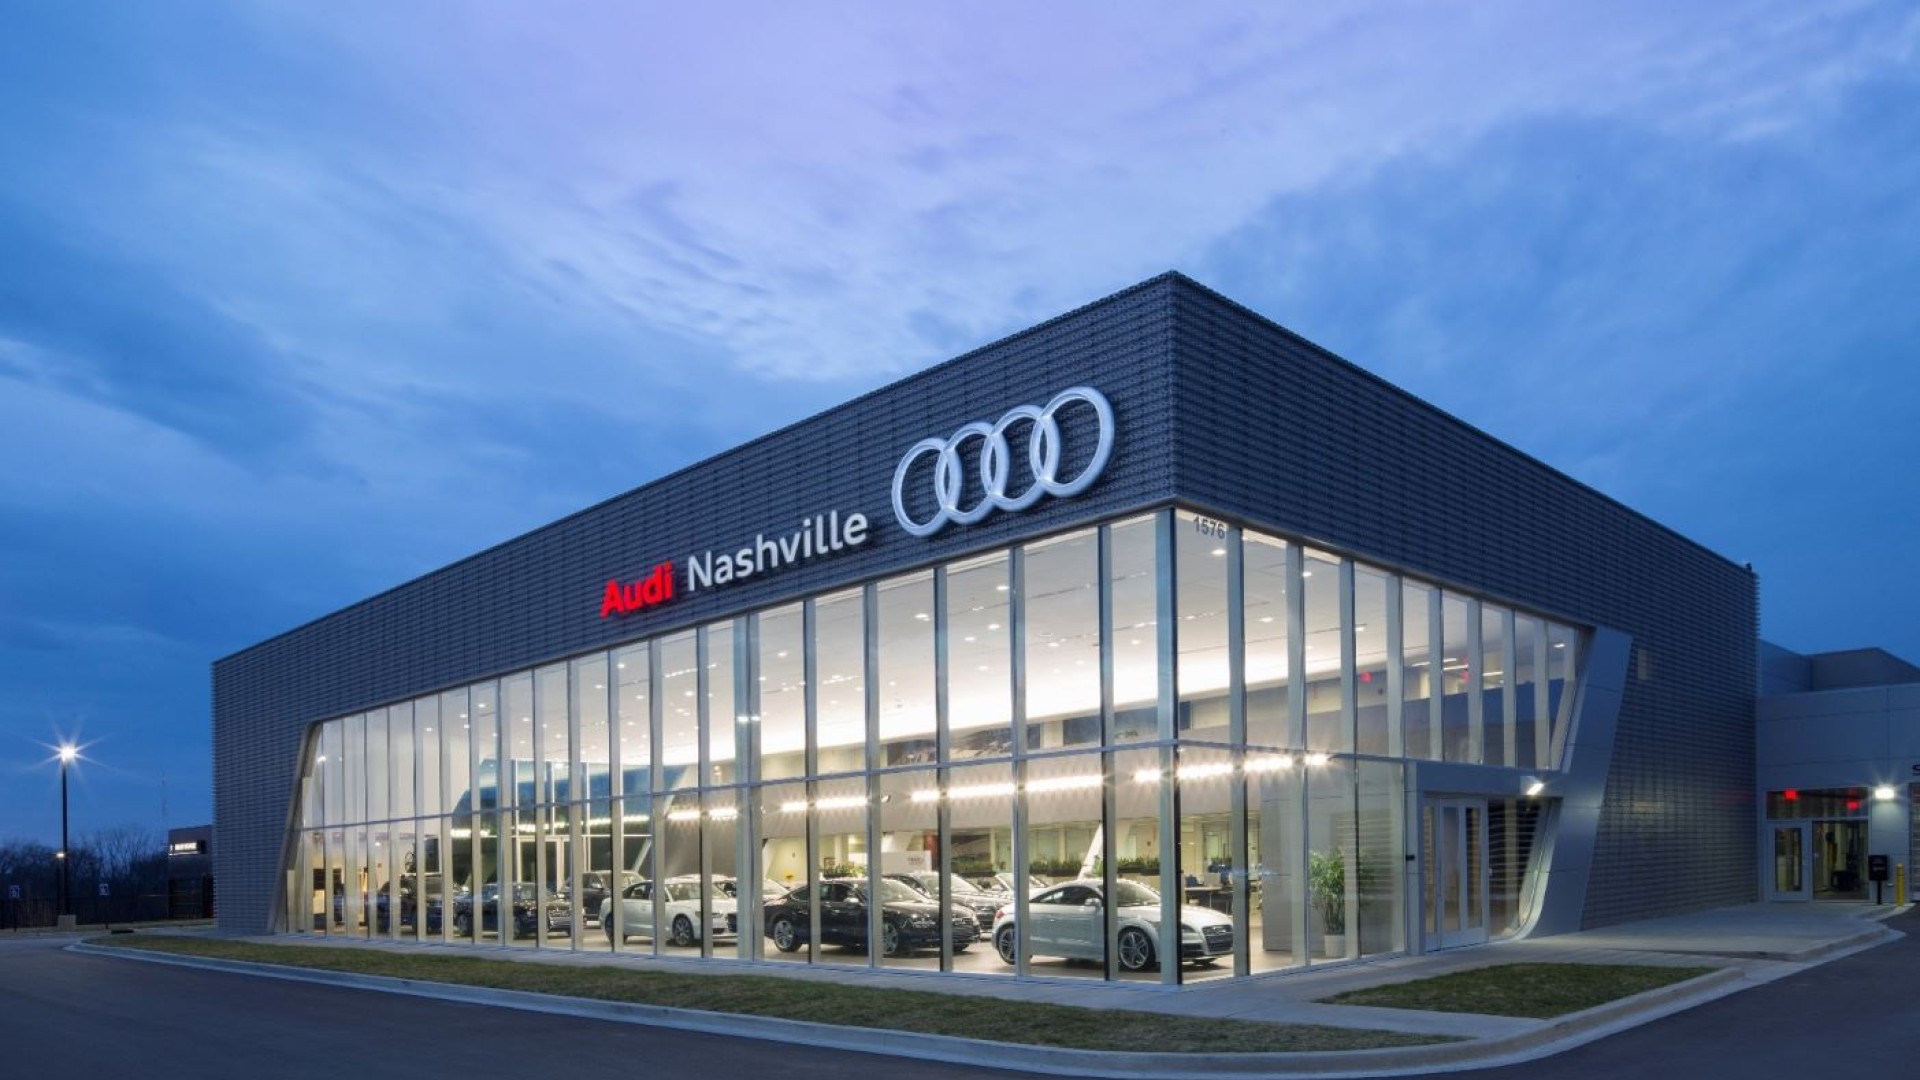 Audi Nashville